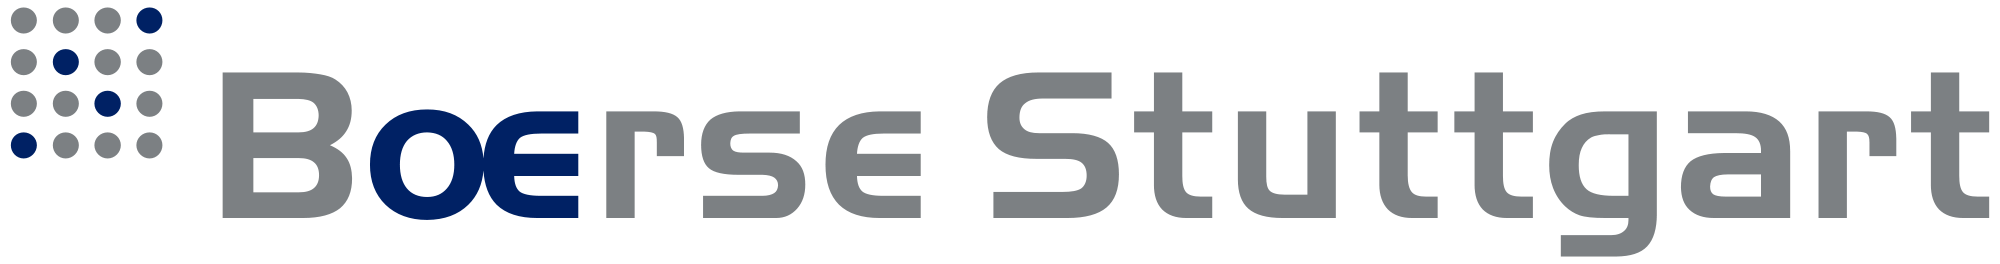 Boerse_Stuttgart_logo